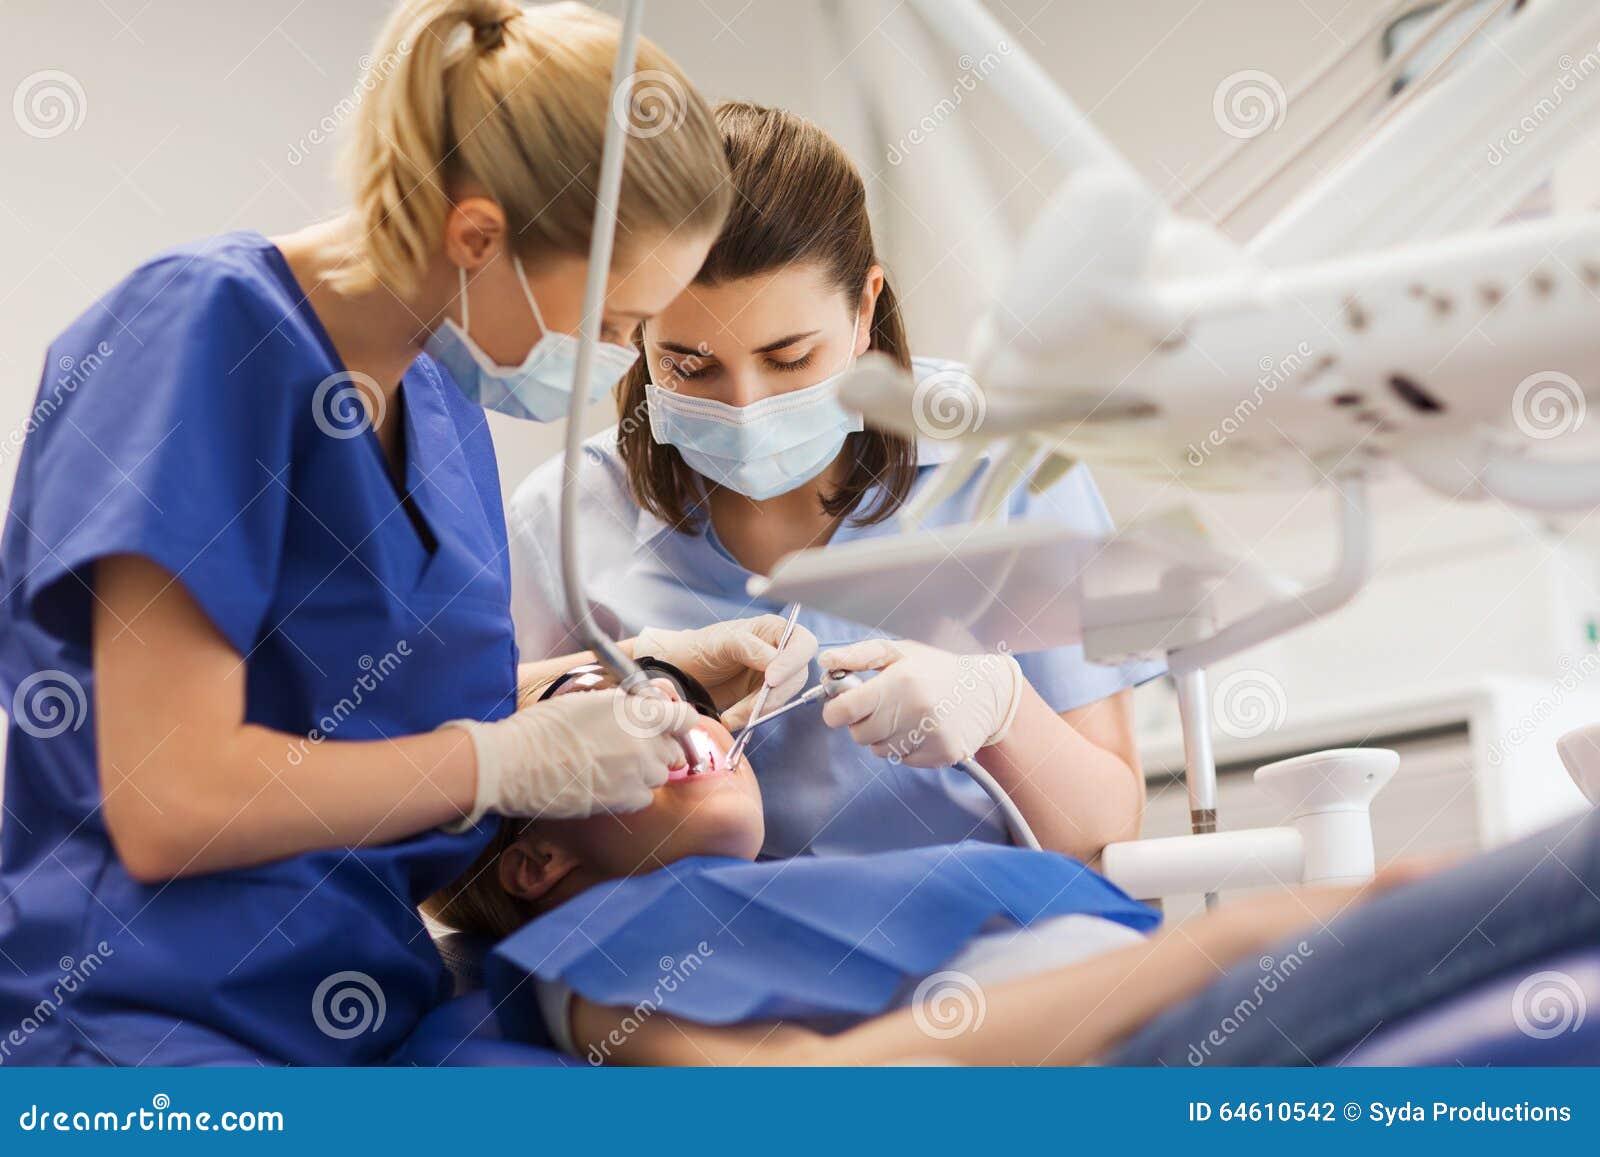 female dentists treating patient girl teeth